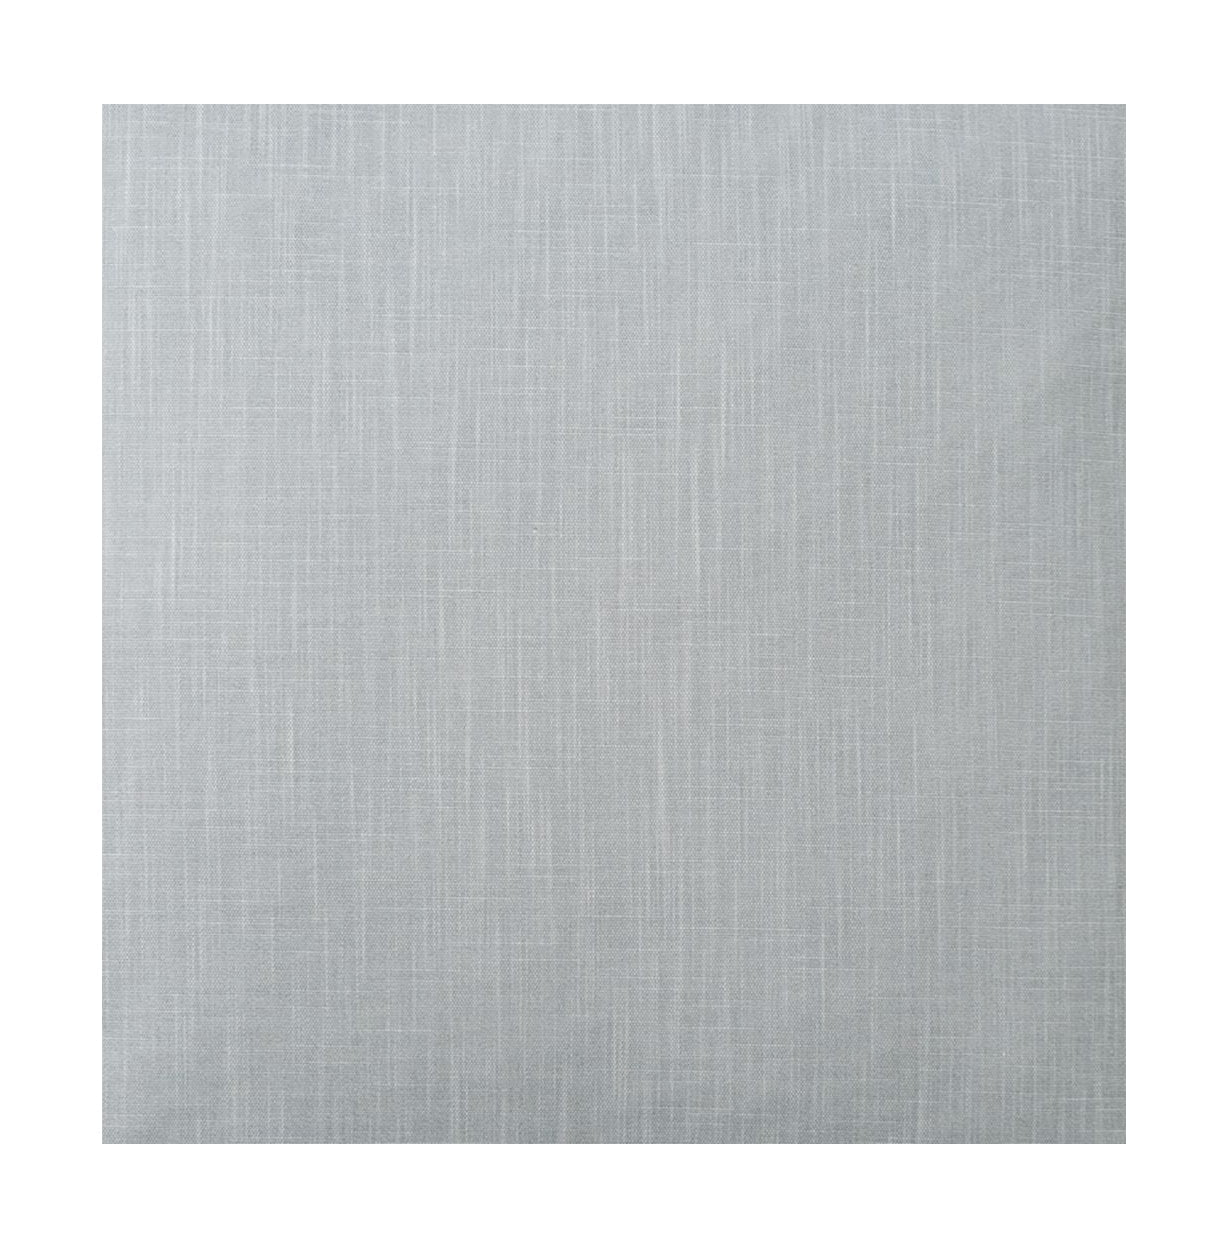 Spira Klotz Fabric Width 150 Cm (Price Per Meter), Light Smoke Blue